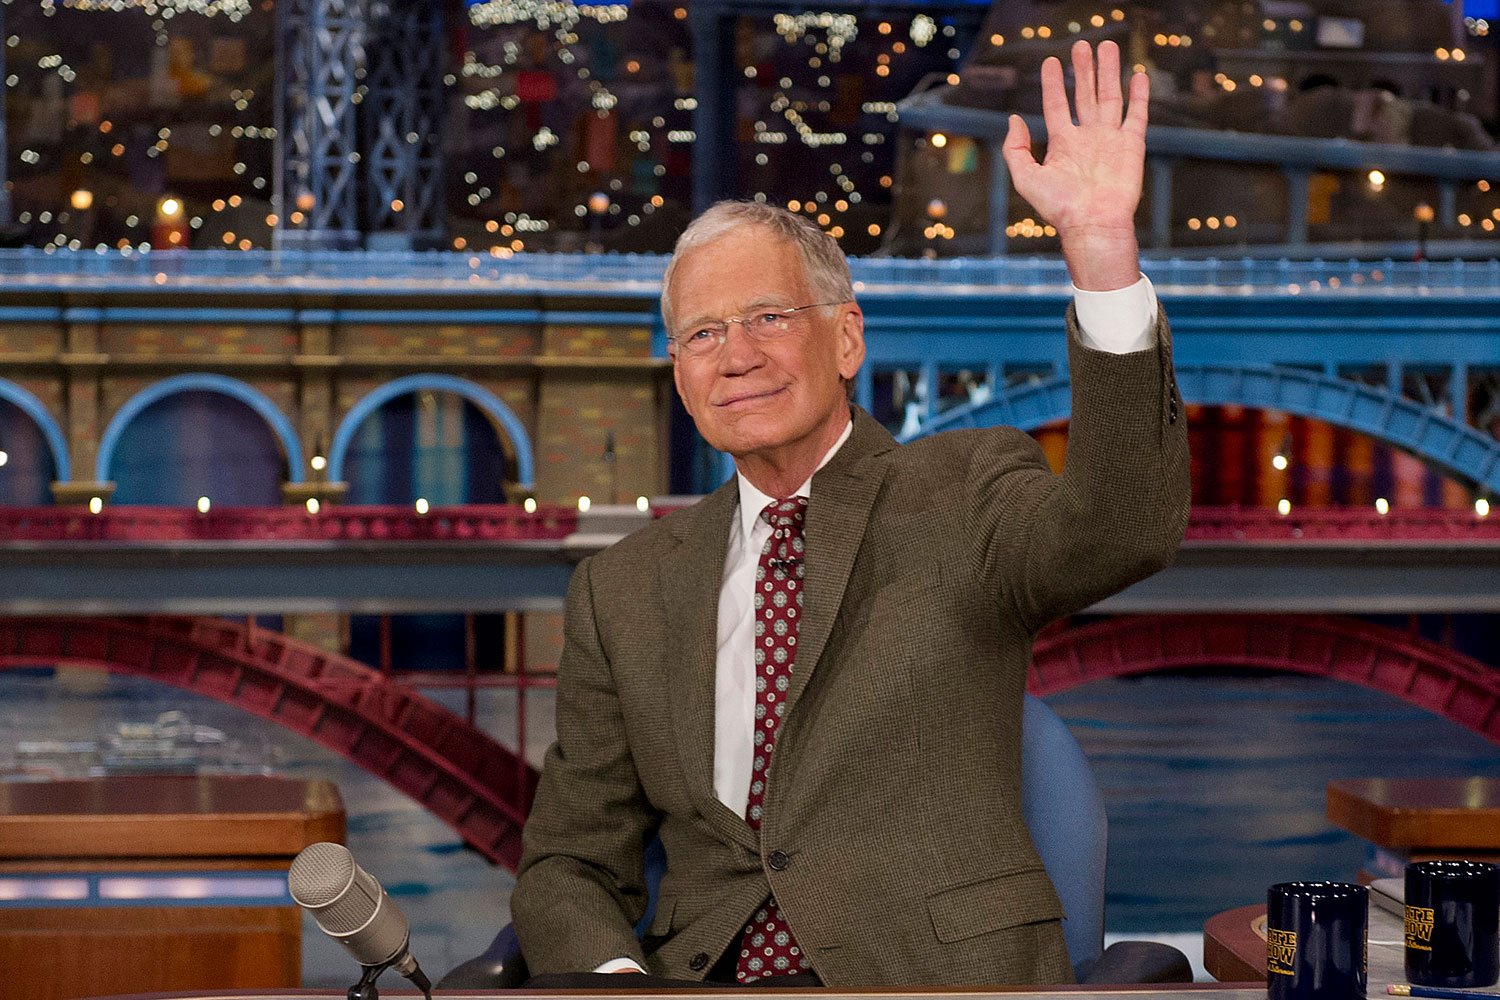 David Letterman—TV host